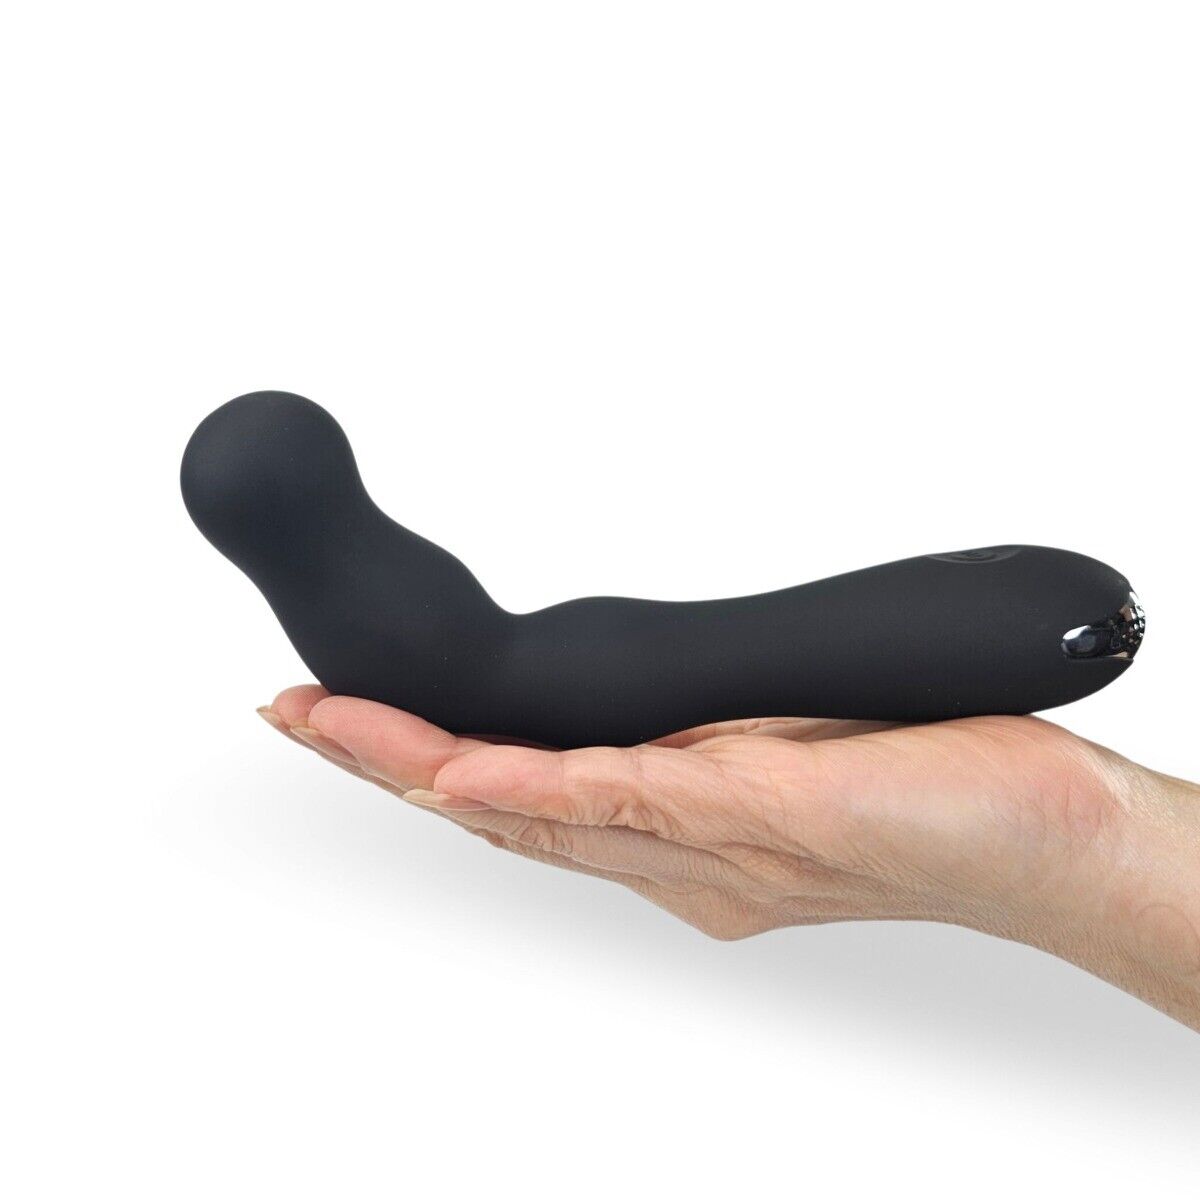 Silicone Vibrating G-spot P-spot Anal Vibrator Prostate Massager Stimulator